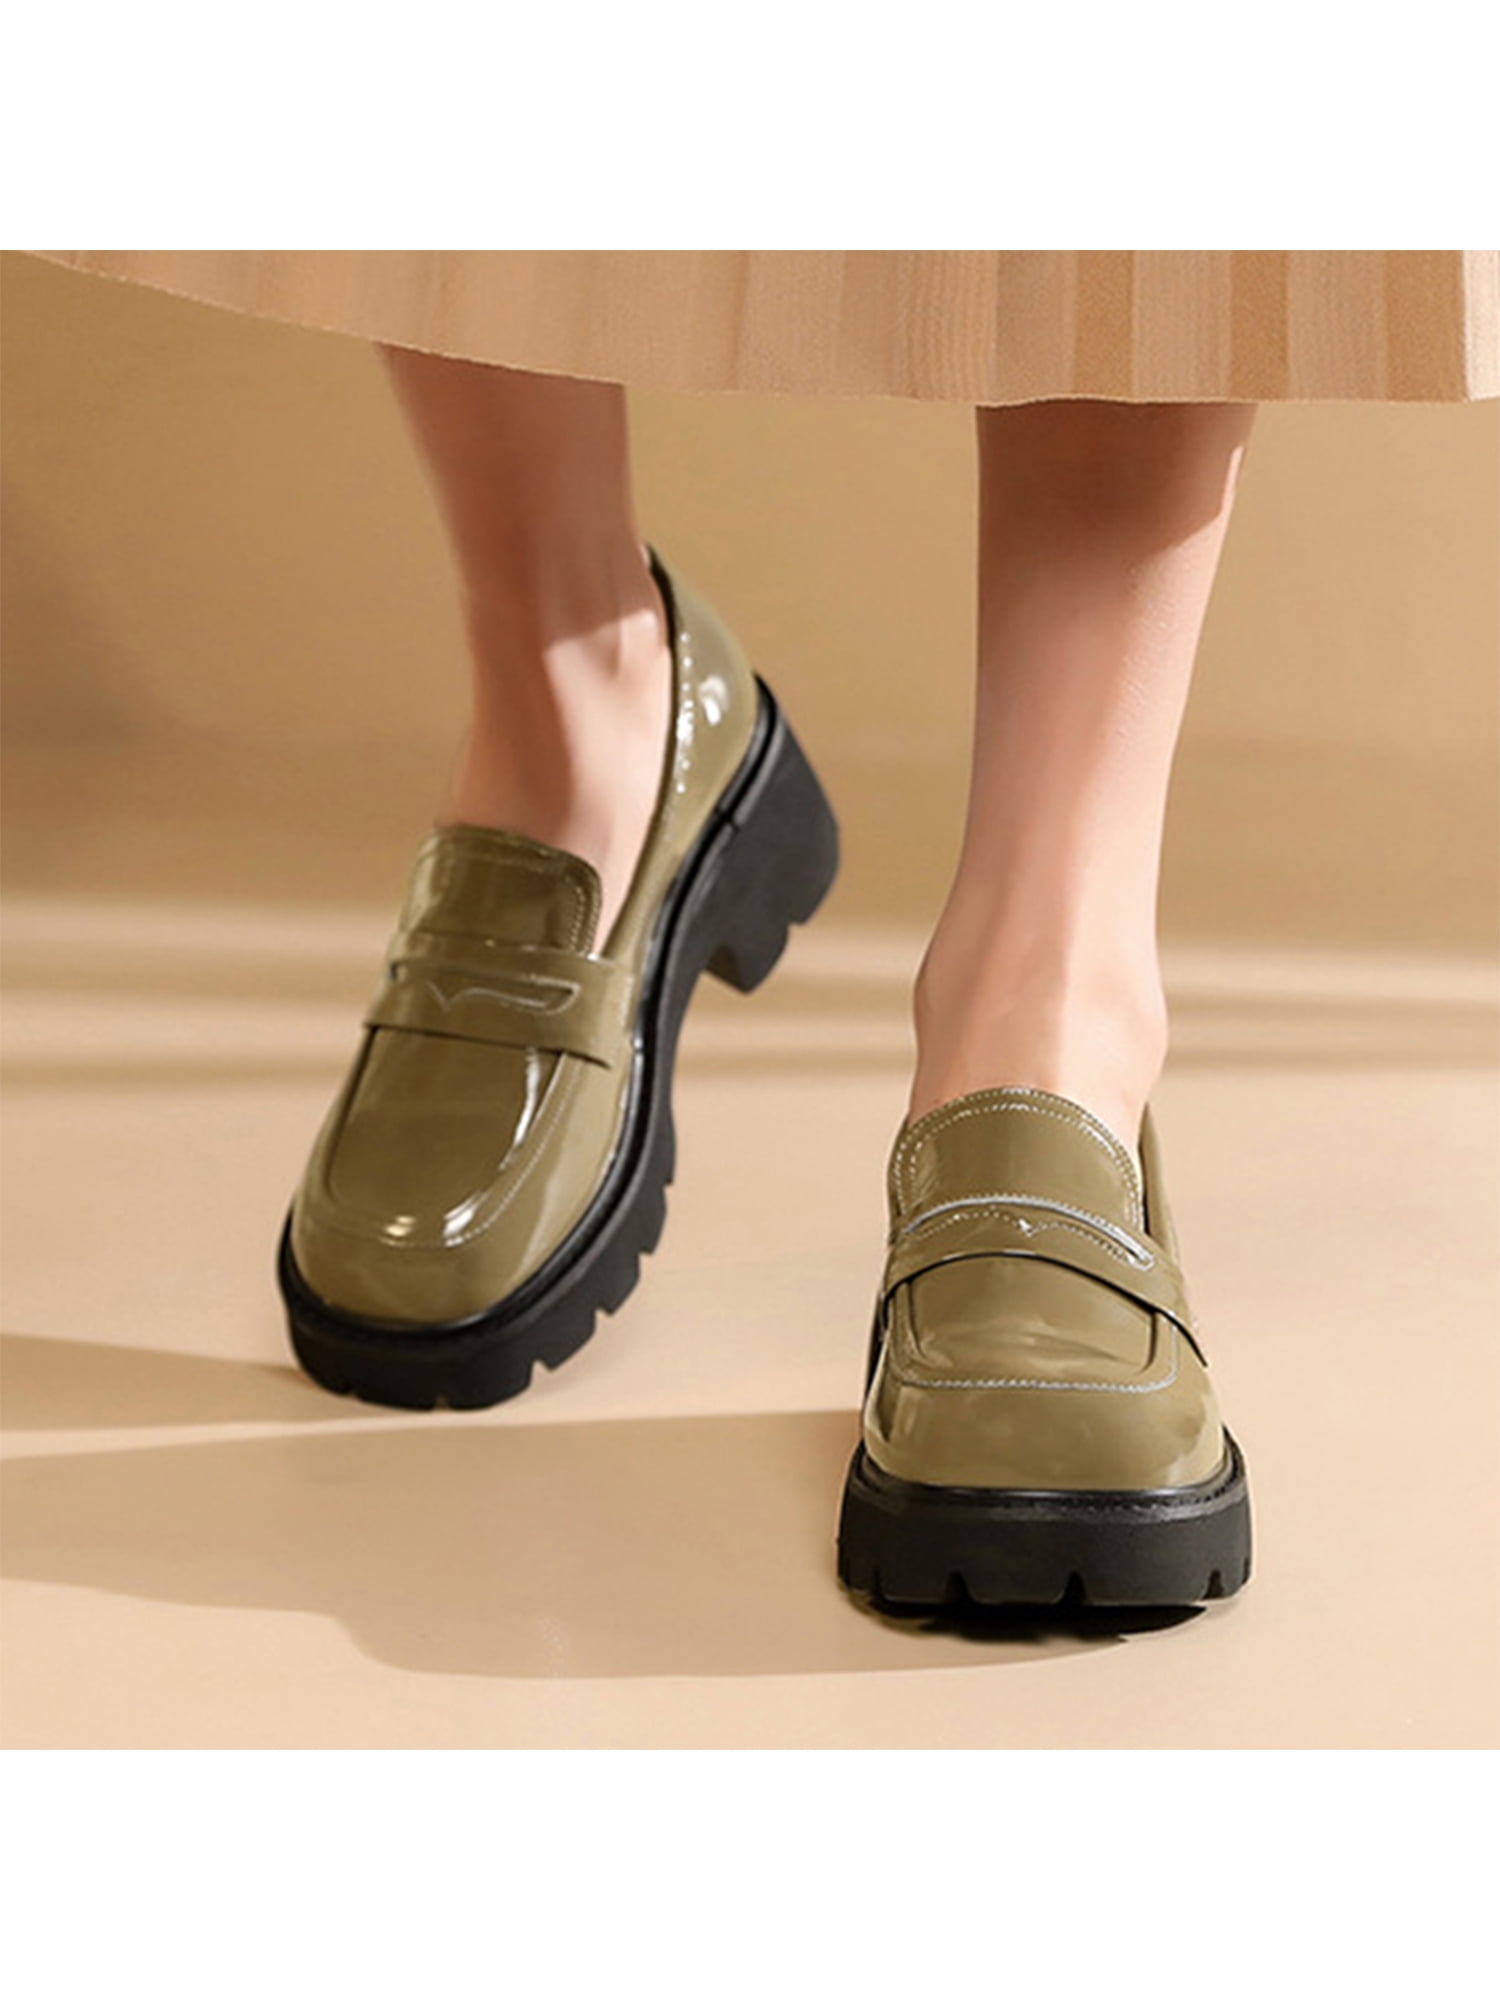 Ymiytan Womens Dress Shoes Platform Loafers Lace Up Casual Walking Shoe  School Loafer Lightweight Comfort Black 4.5 